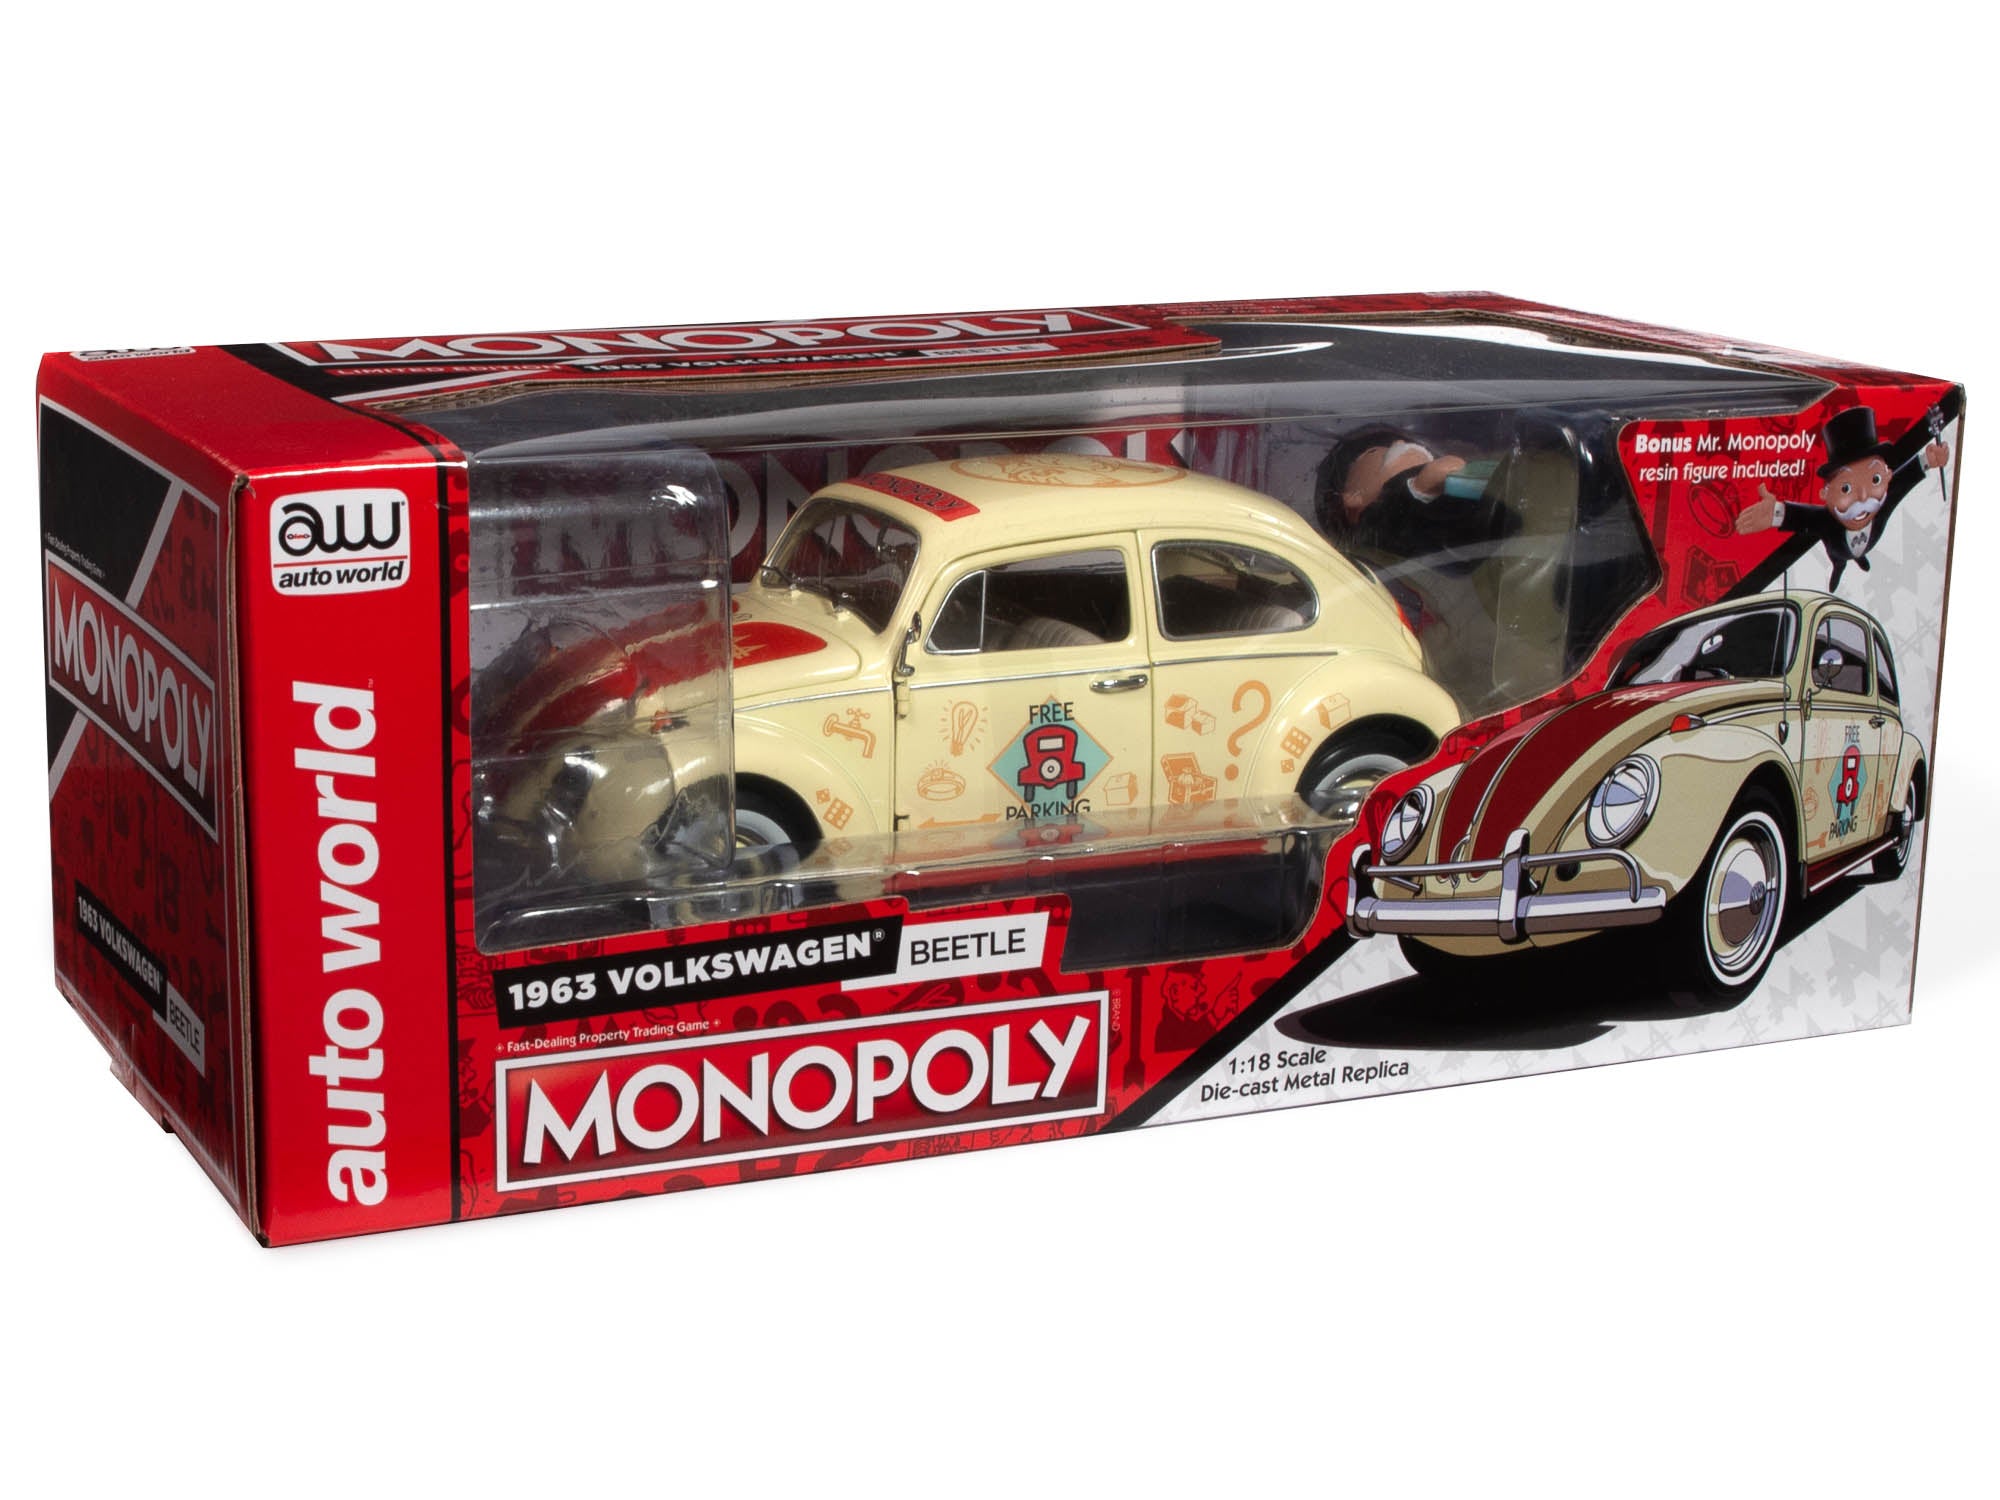 1963 Volkswagen Beetle Monopoly Free Parking 1:18 Scale